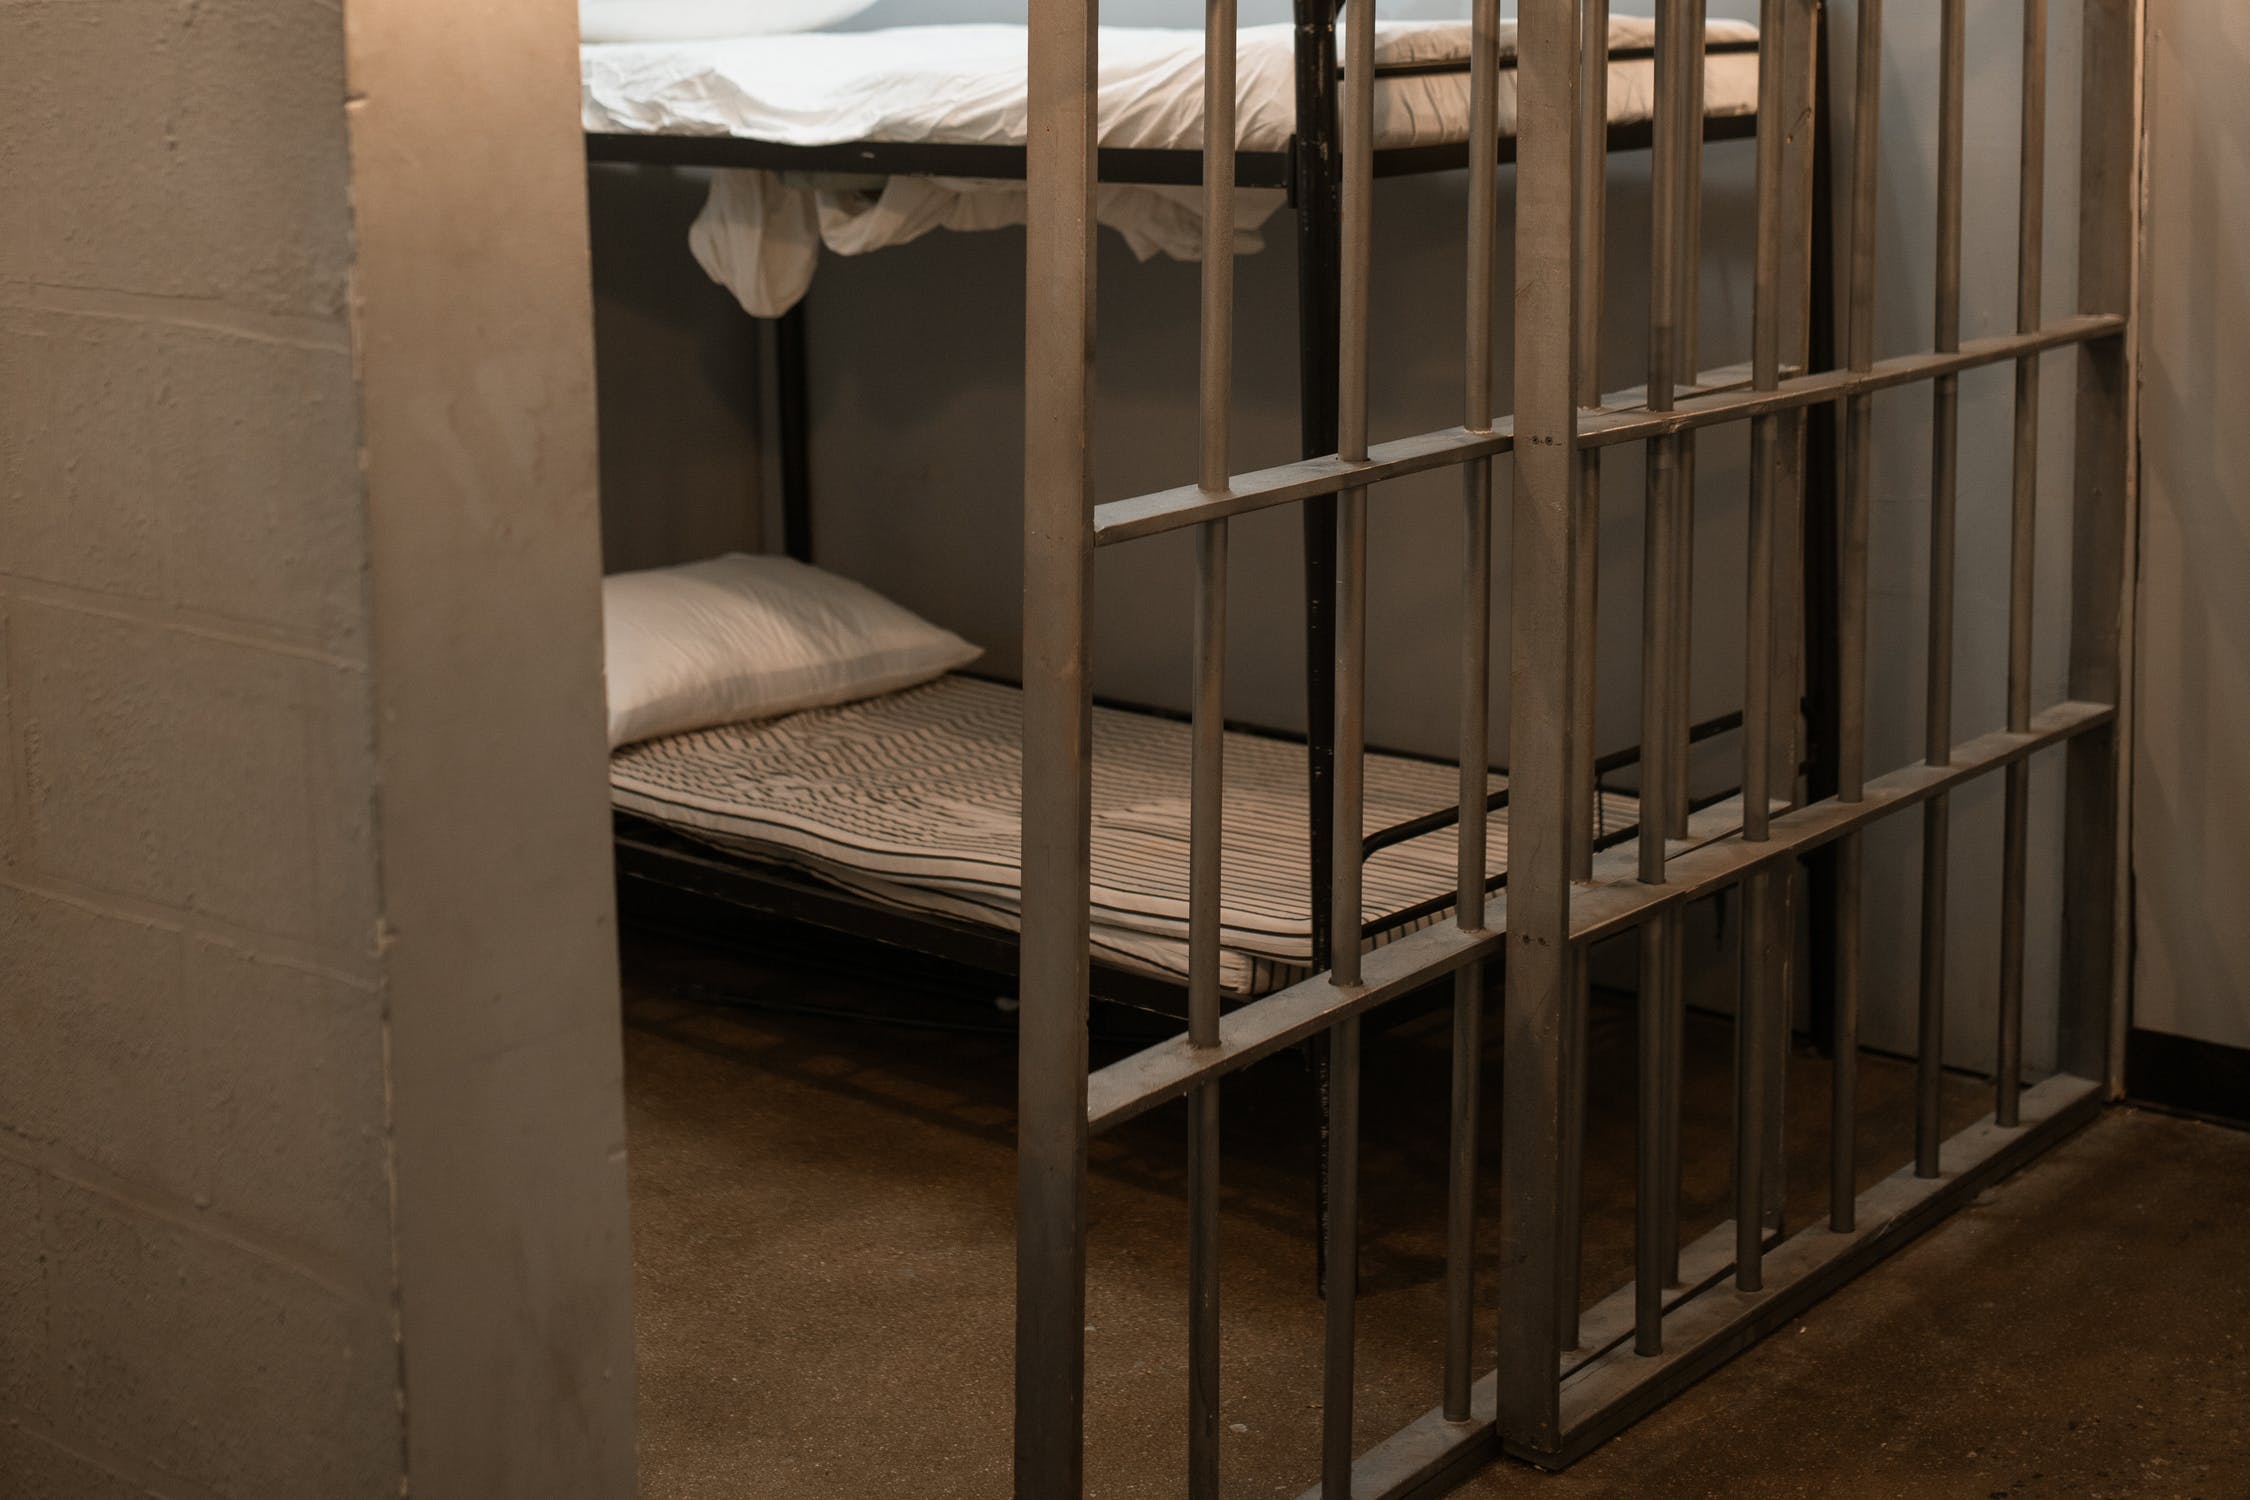 Prison cell | Source: Pexels